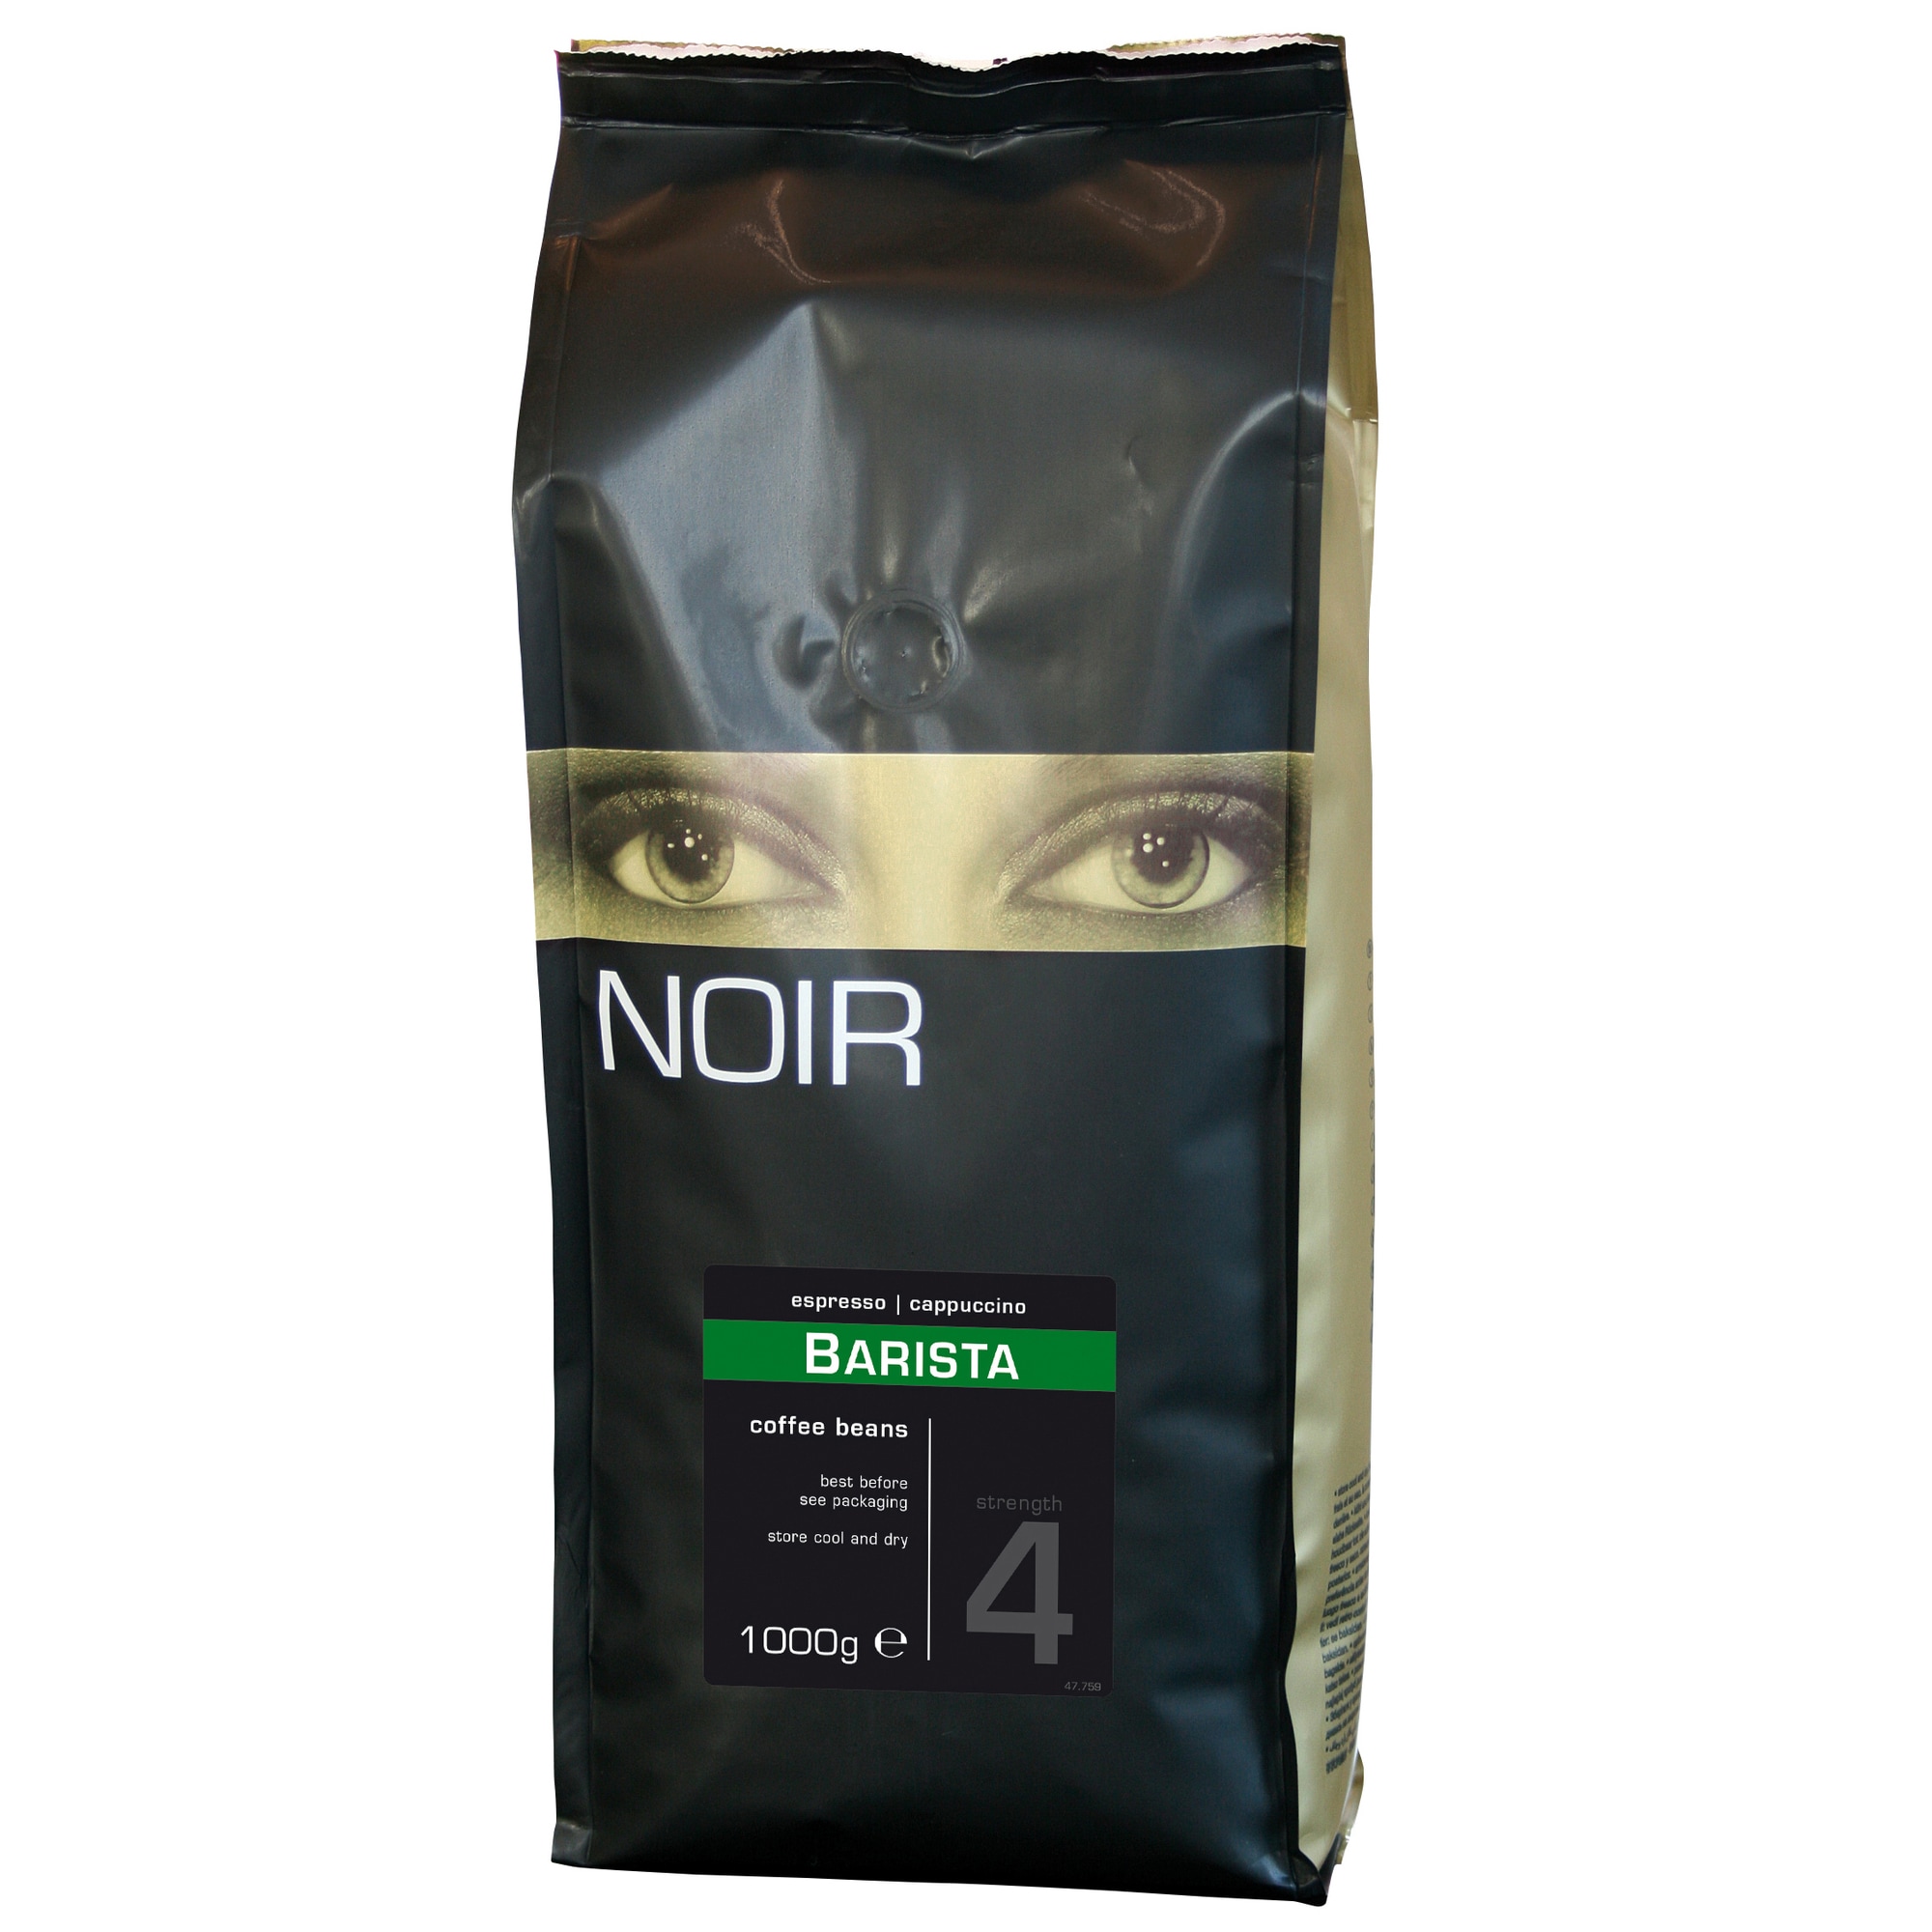 Noir Barista coffee thumbnail